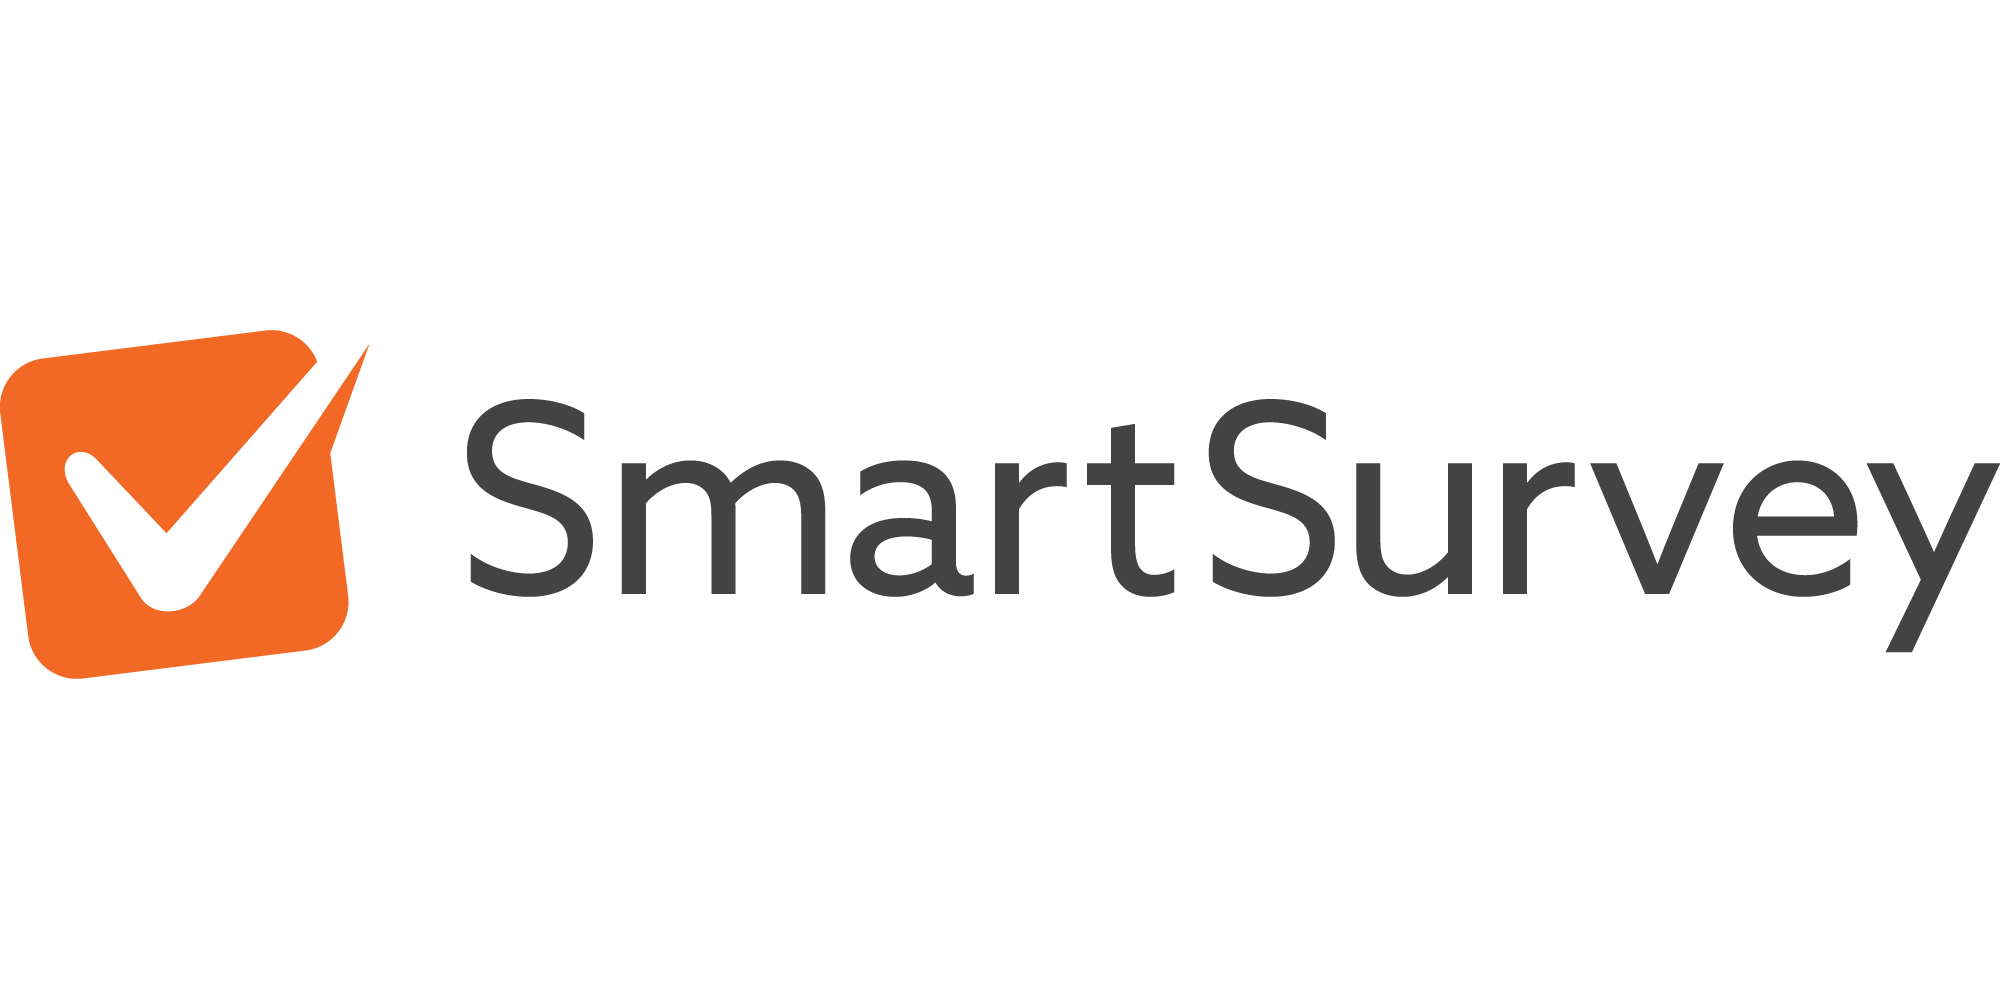 SmartSurvey logo